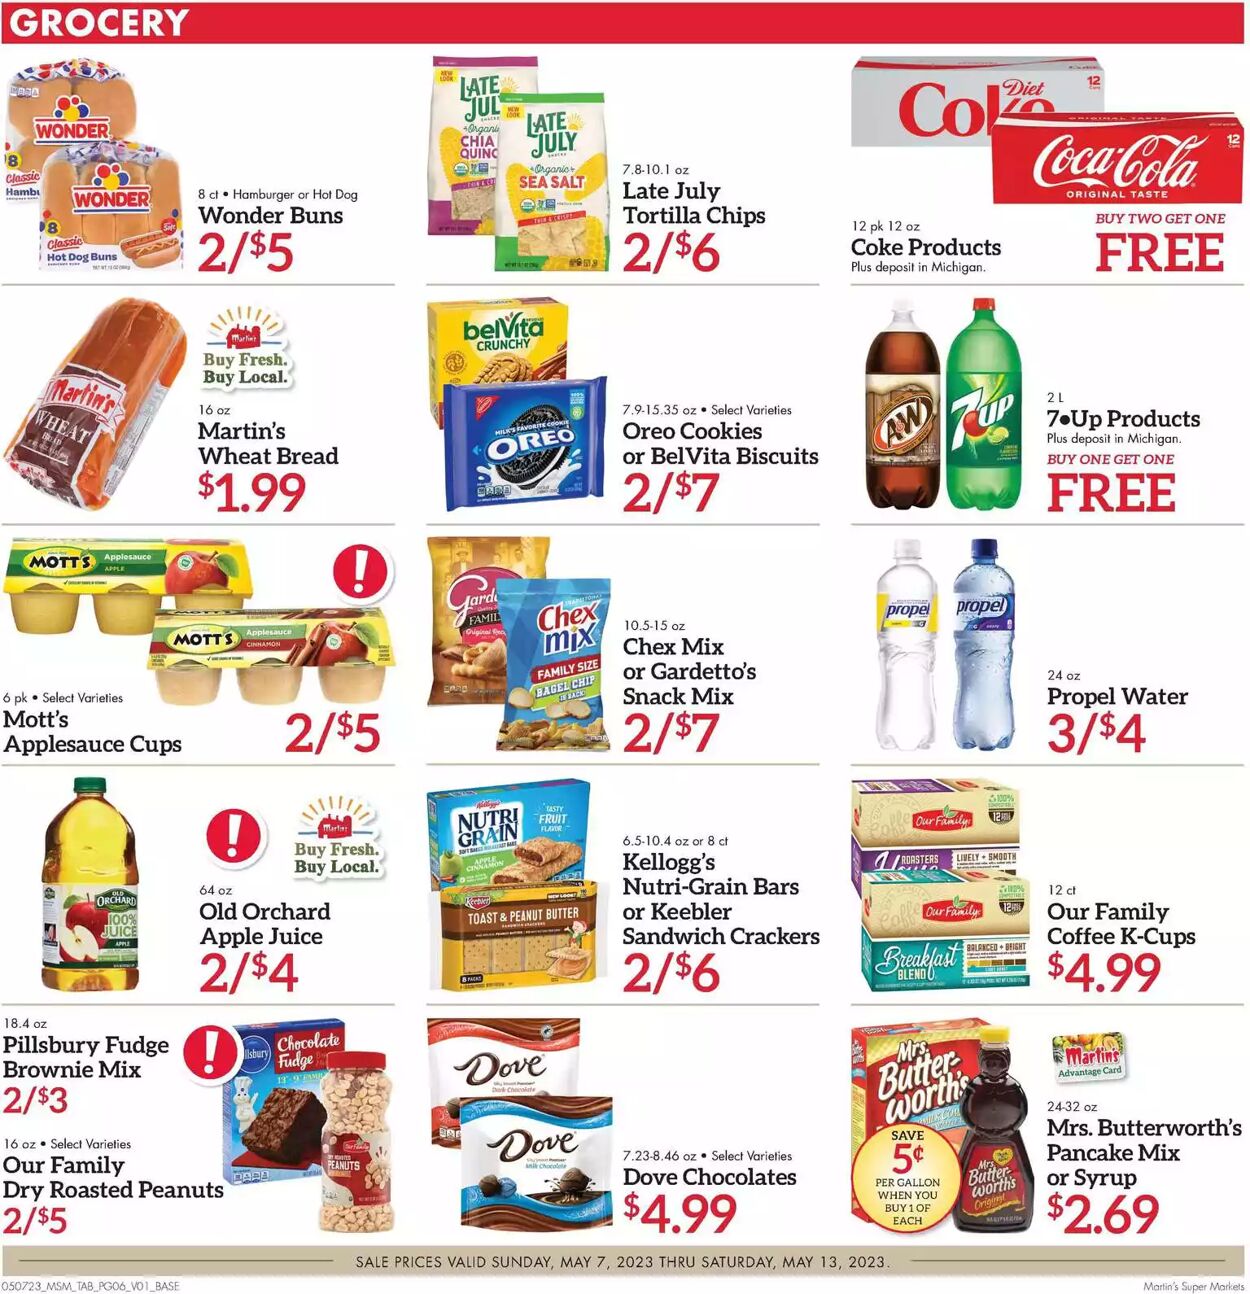 Weekly ad Martin's Supermarkets 05/07/2023 - 05/13/2023